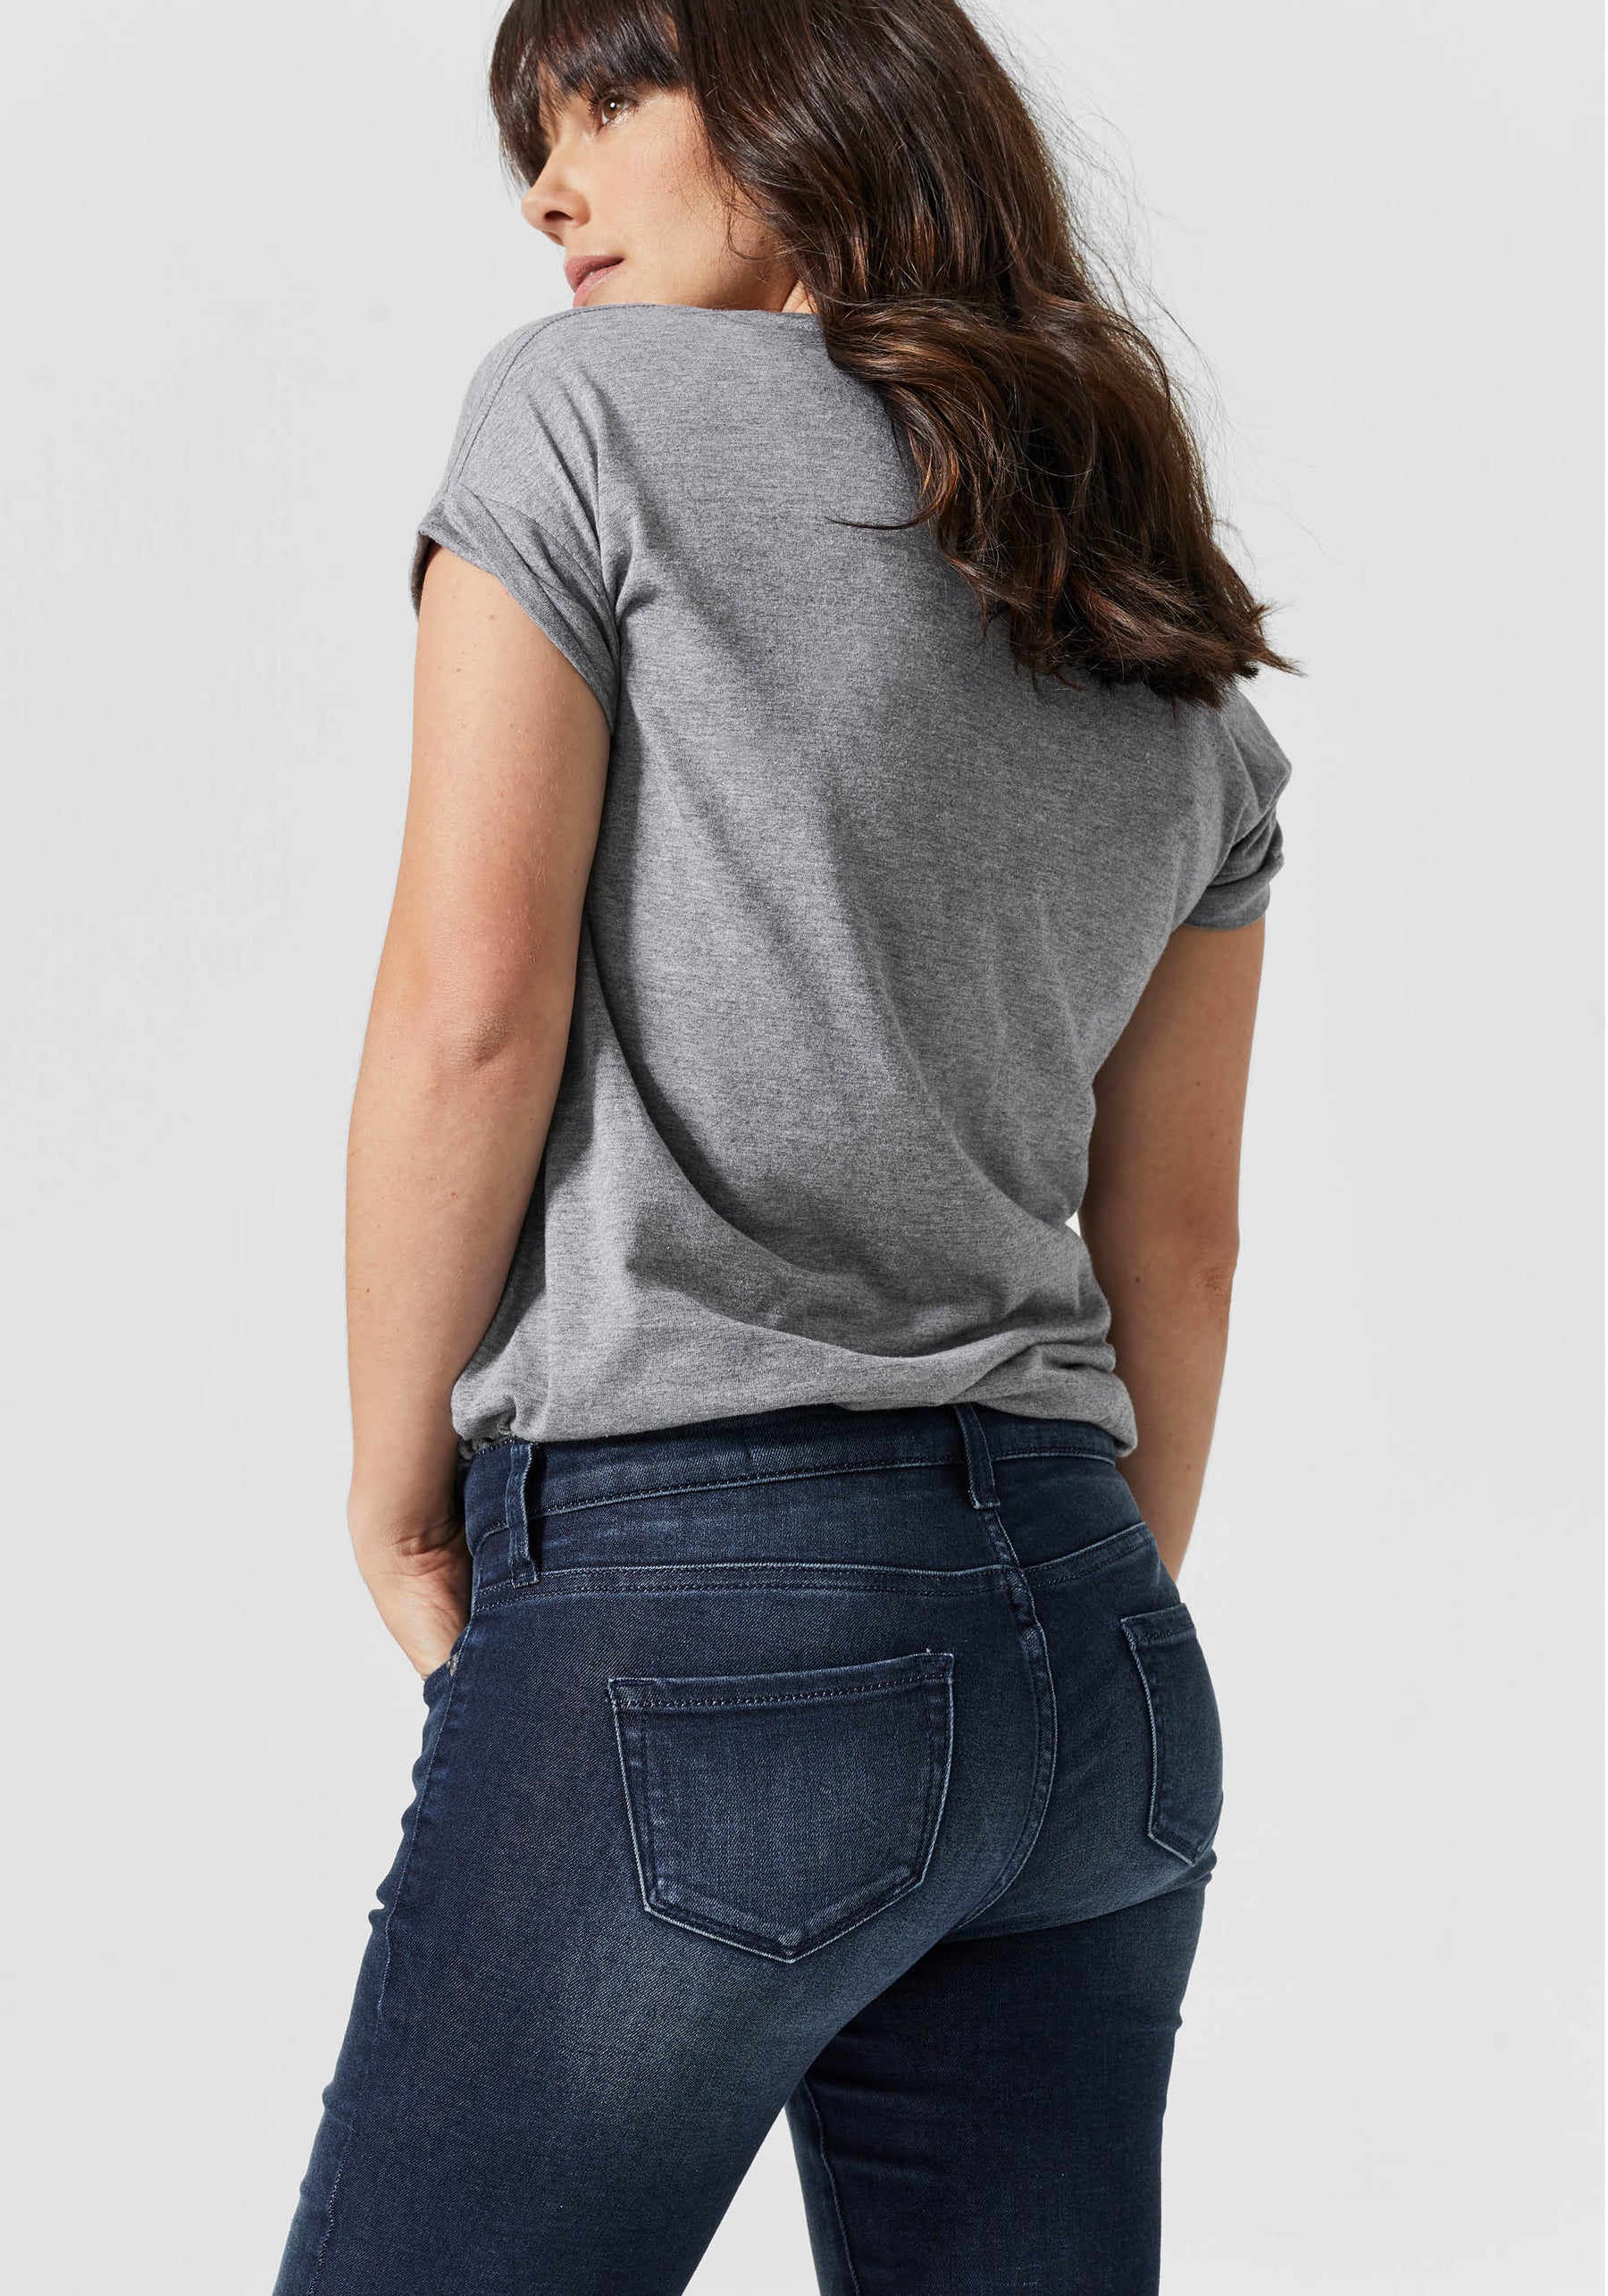 BLANQI® Denim Postpartum Belly Support Flare Jeans